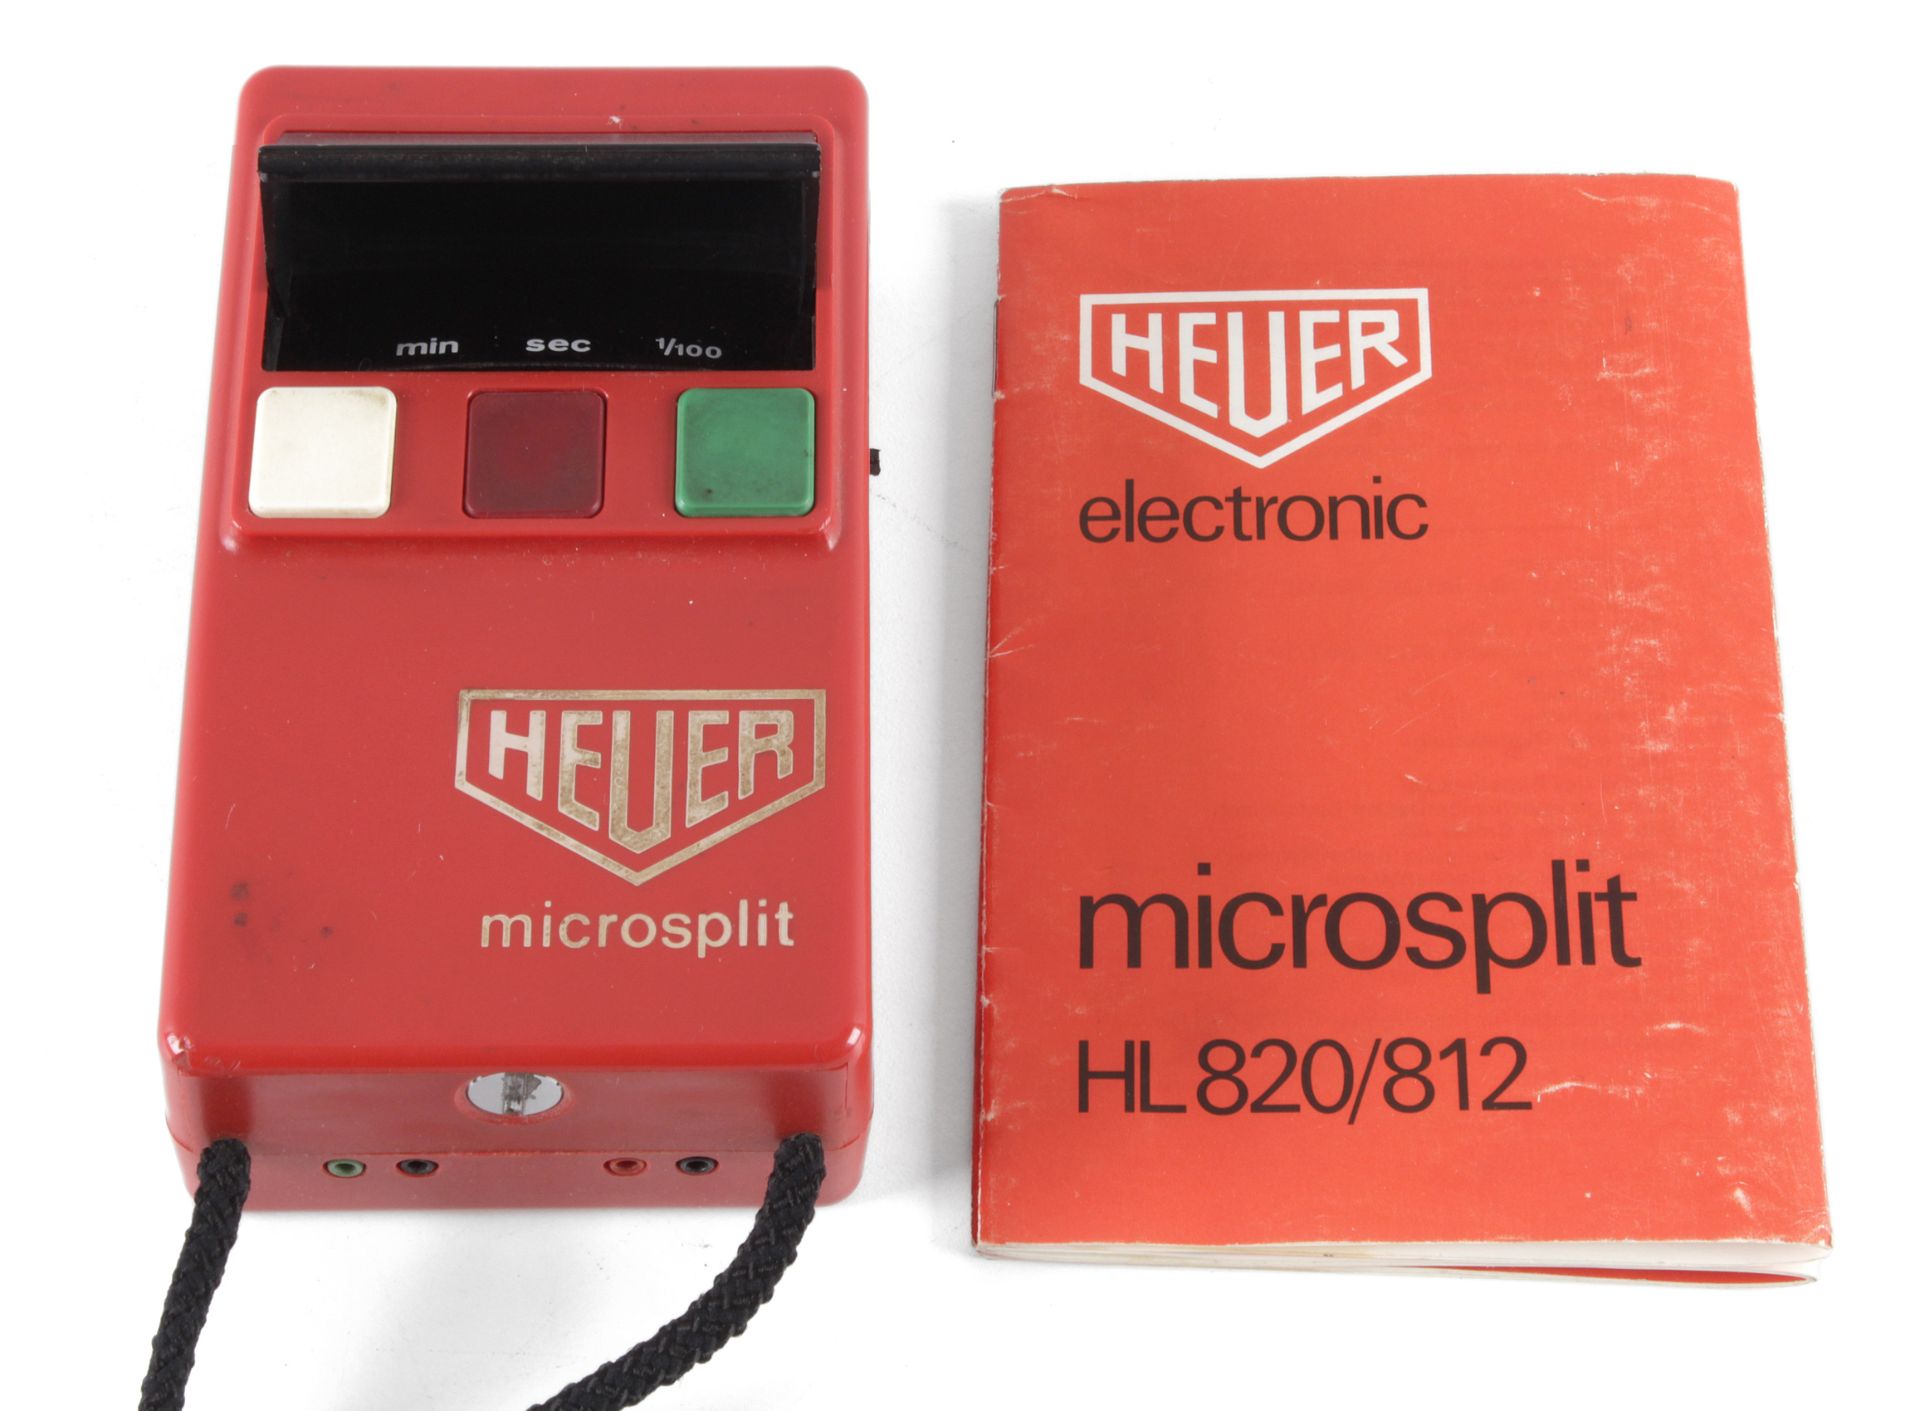 Heuer. Microsplit HL 820